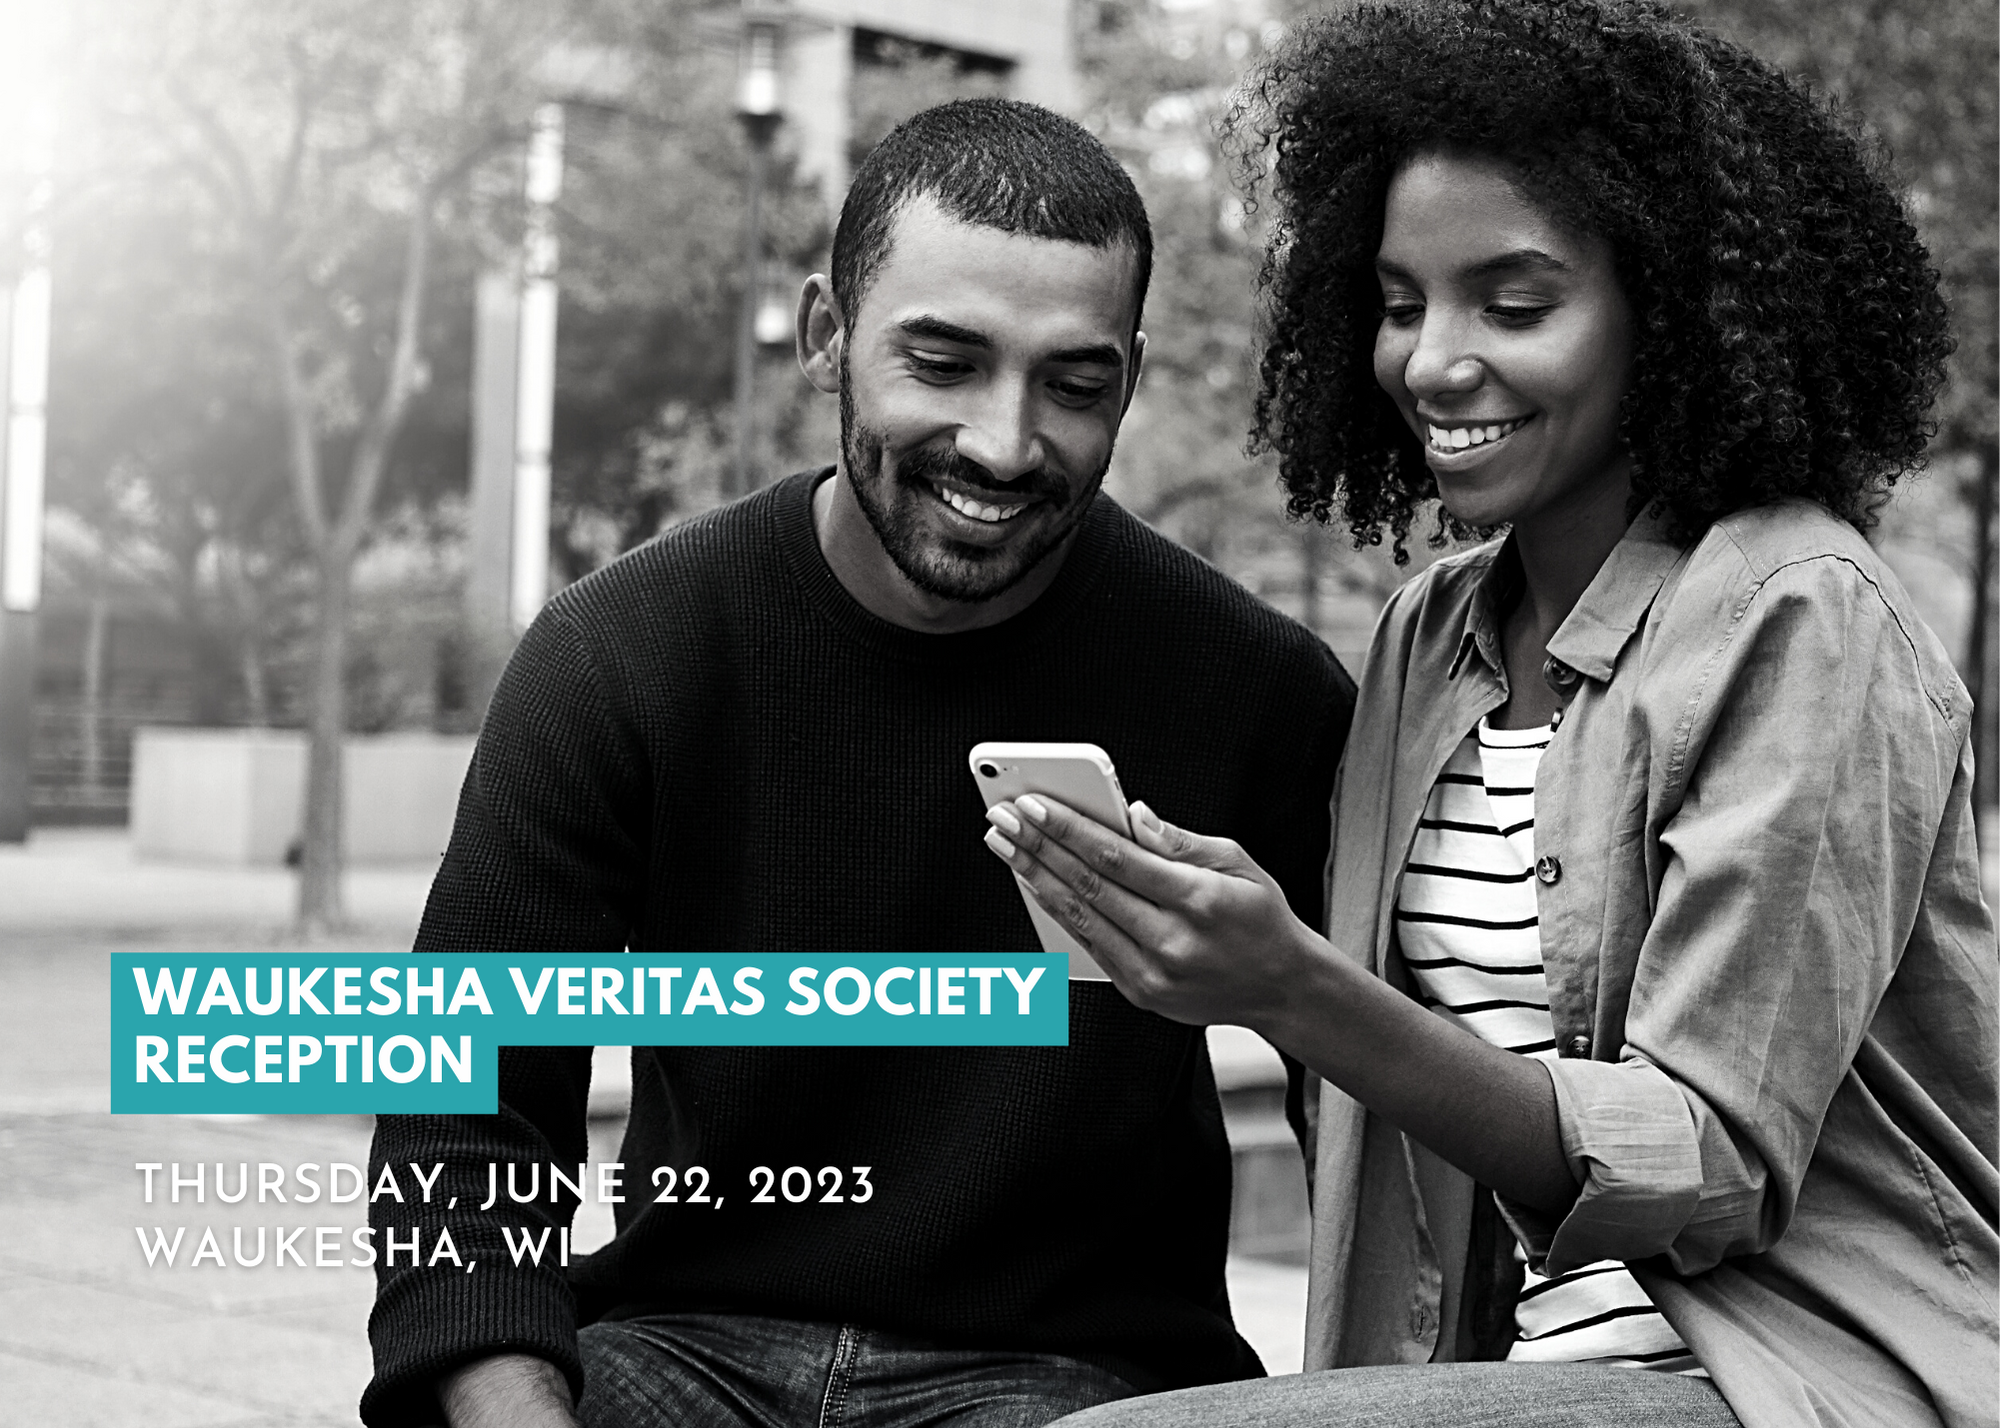 Waukesha Veritas Society Reception